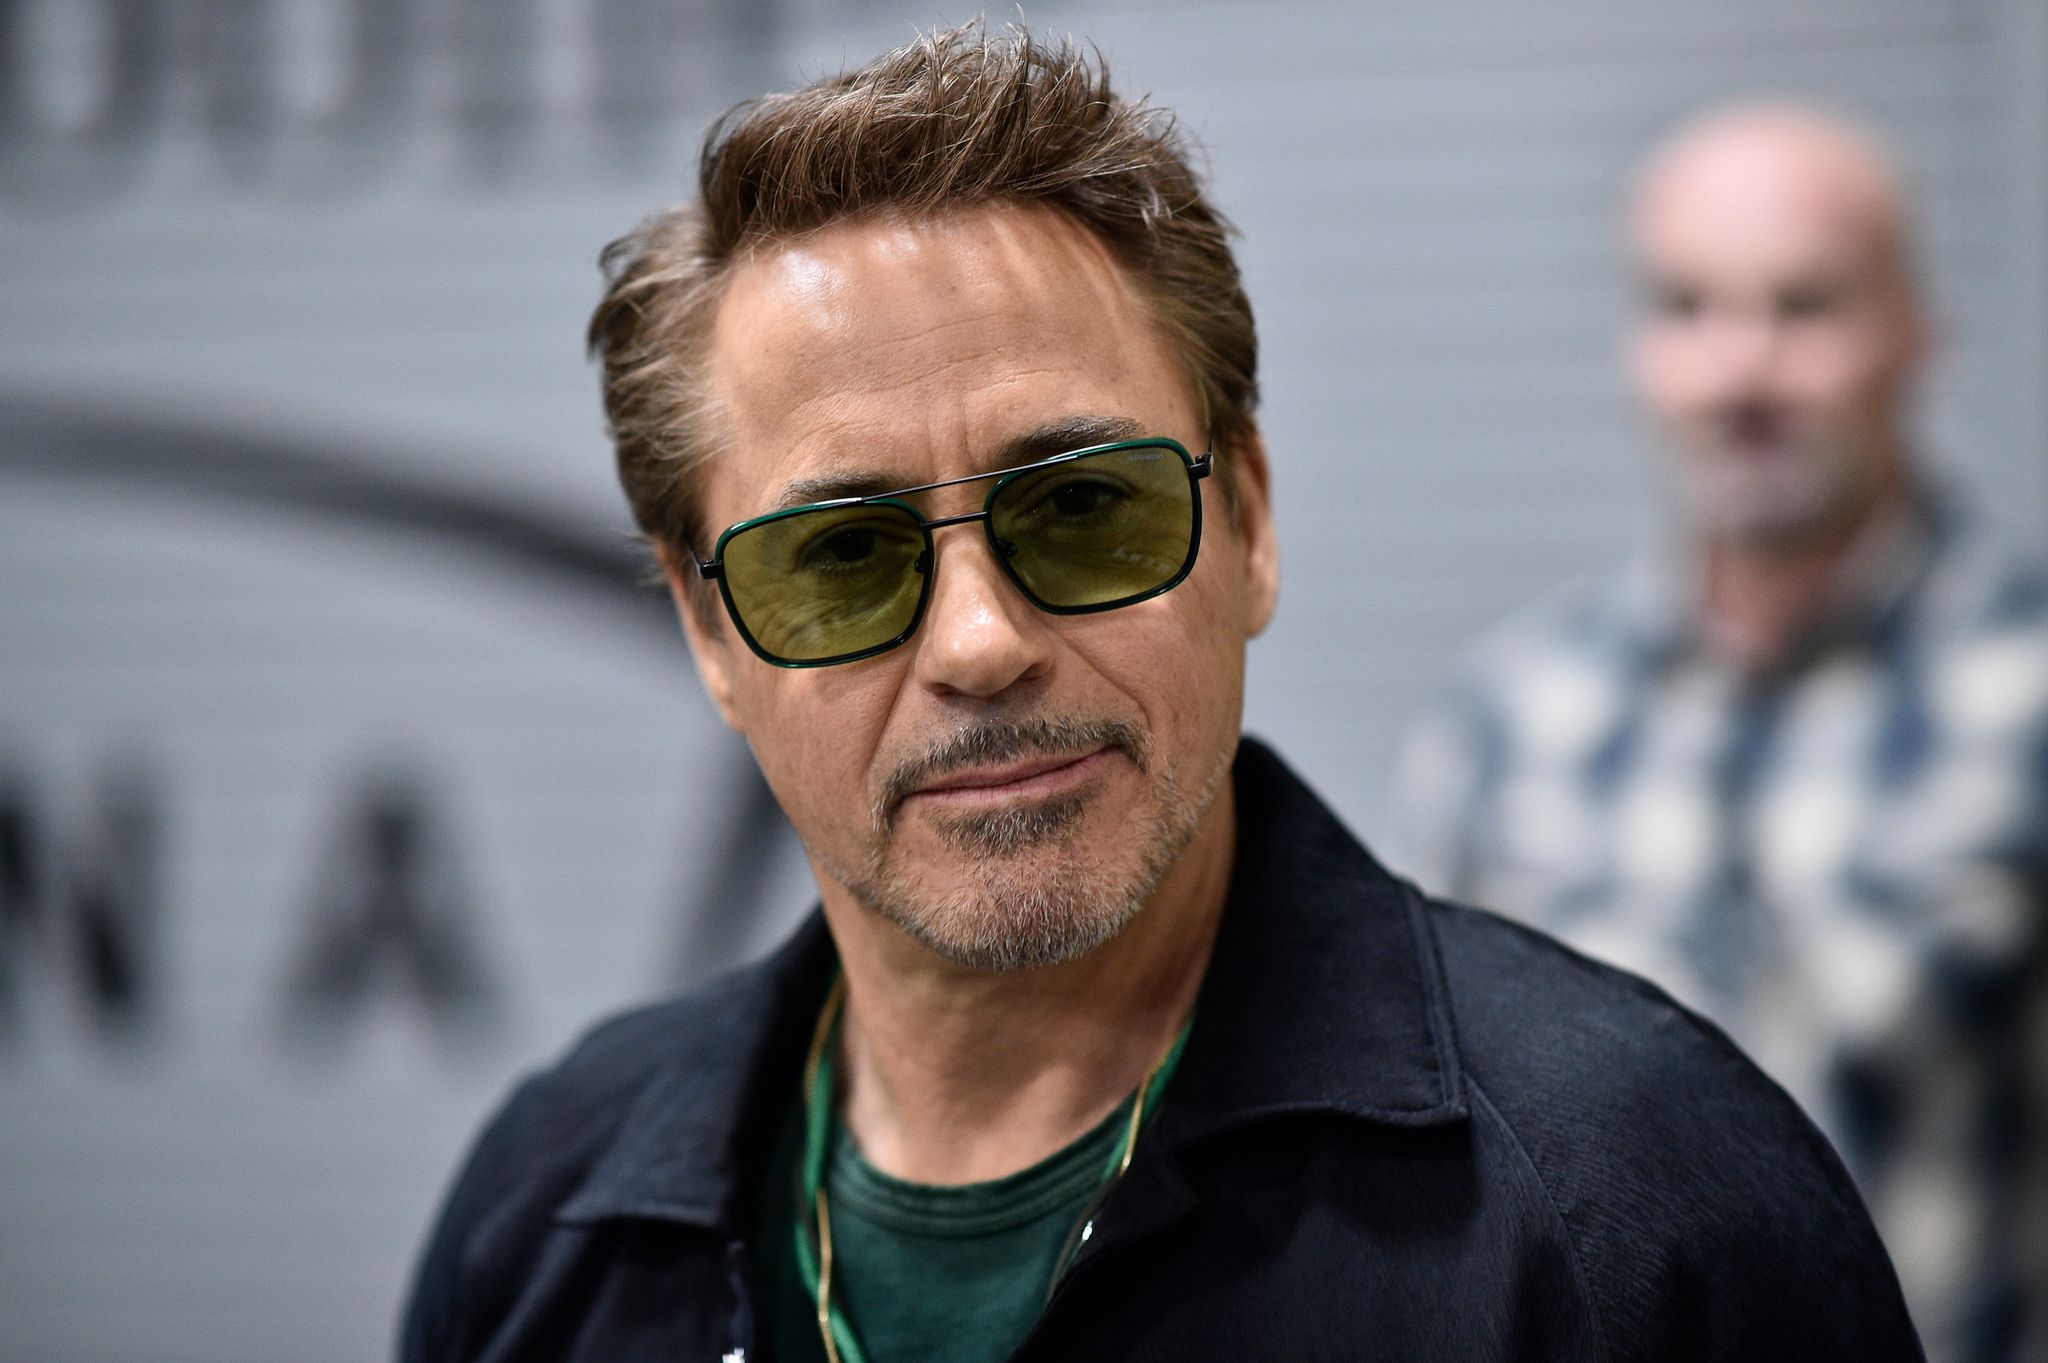 Robert Downey Jr. in 2020 in Las Vegas, Nevada | Source: Getty Images